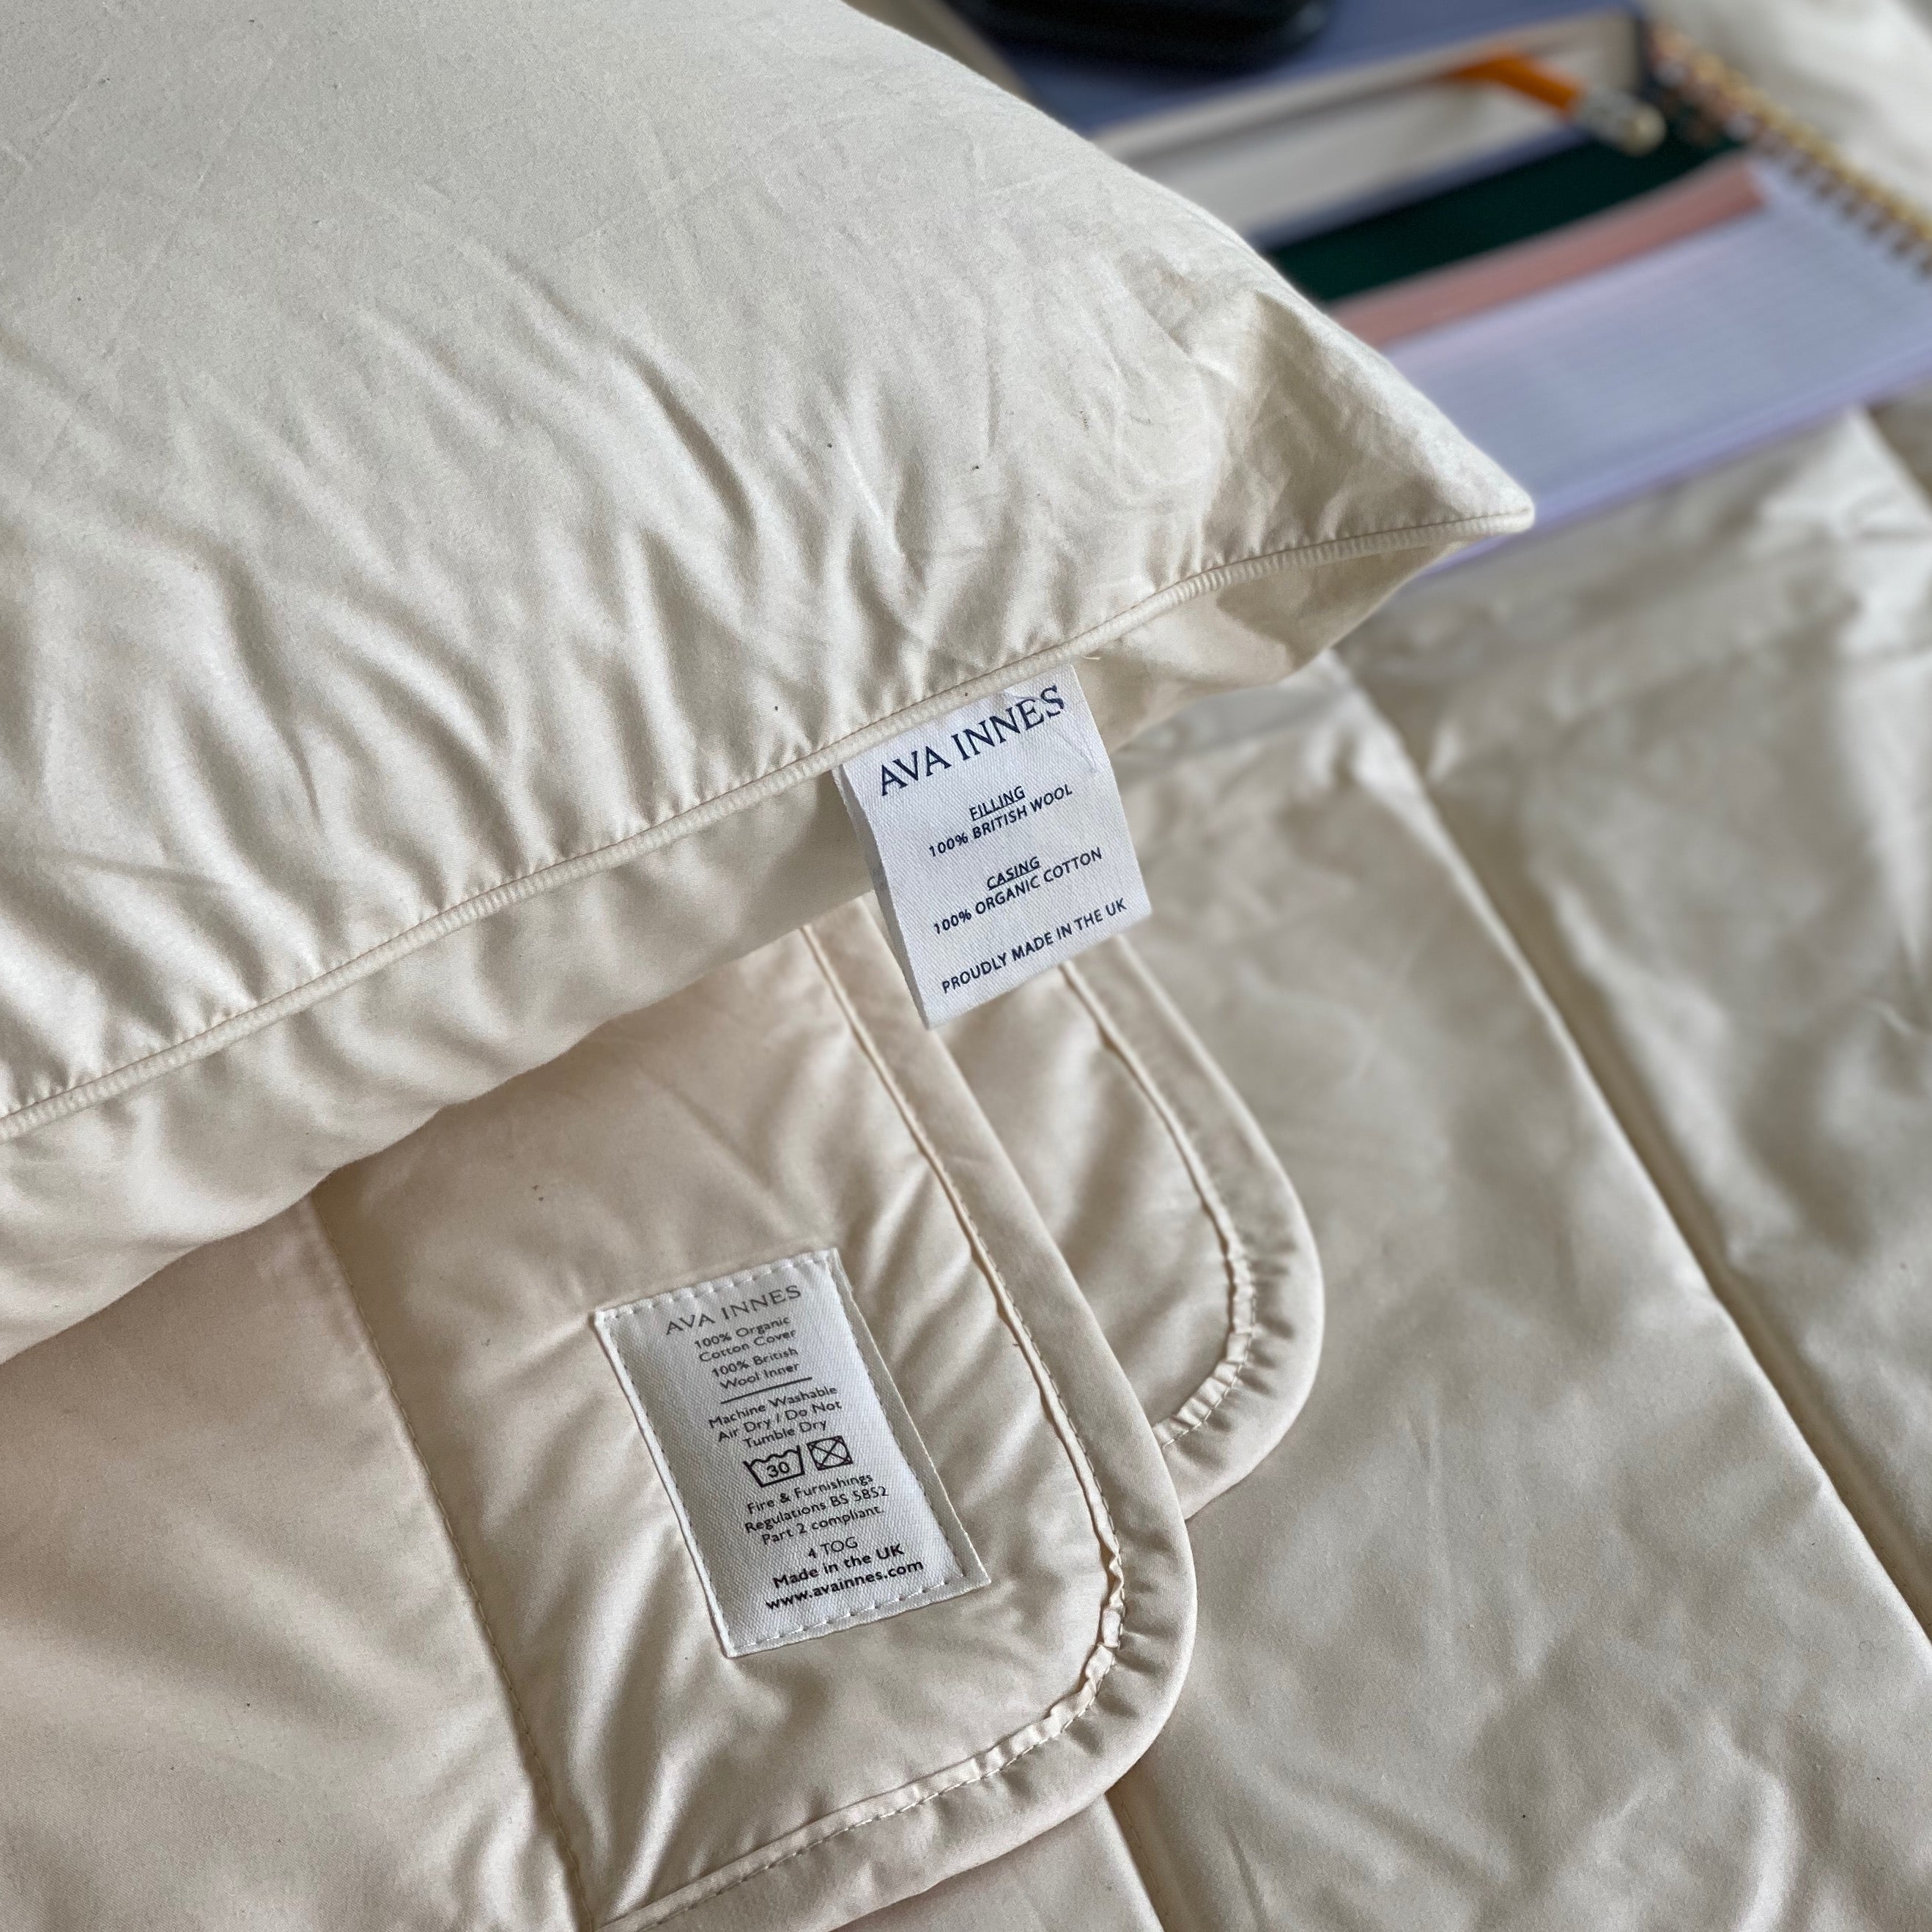  Single wool warm duvet and 2 medium pillows, Ava Innes, Scotland